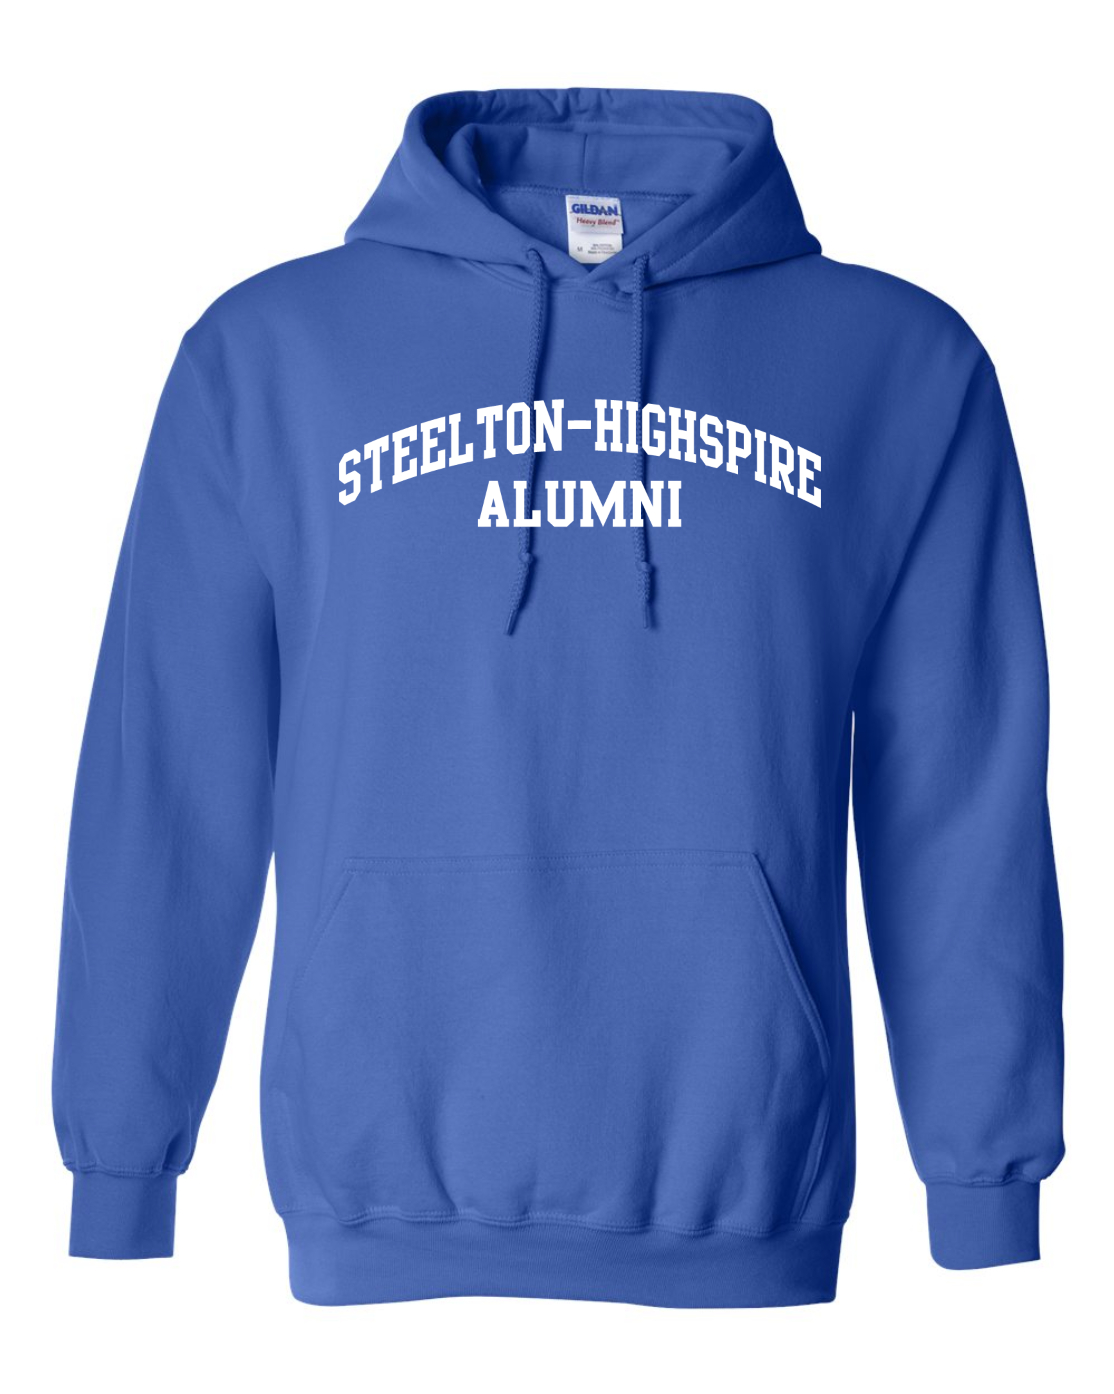 Steelton Standard Hoodie - ALUMNI